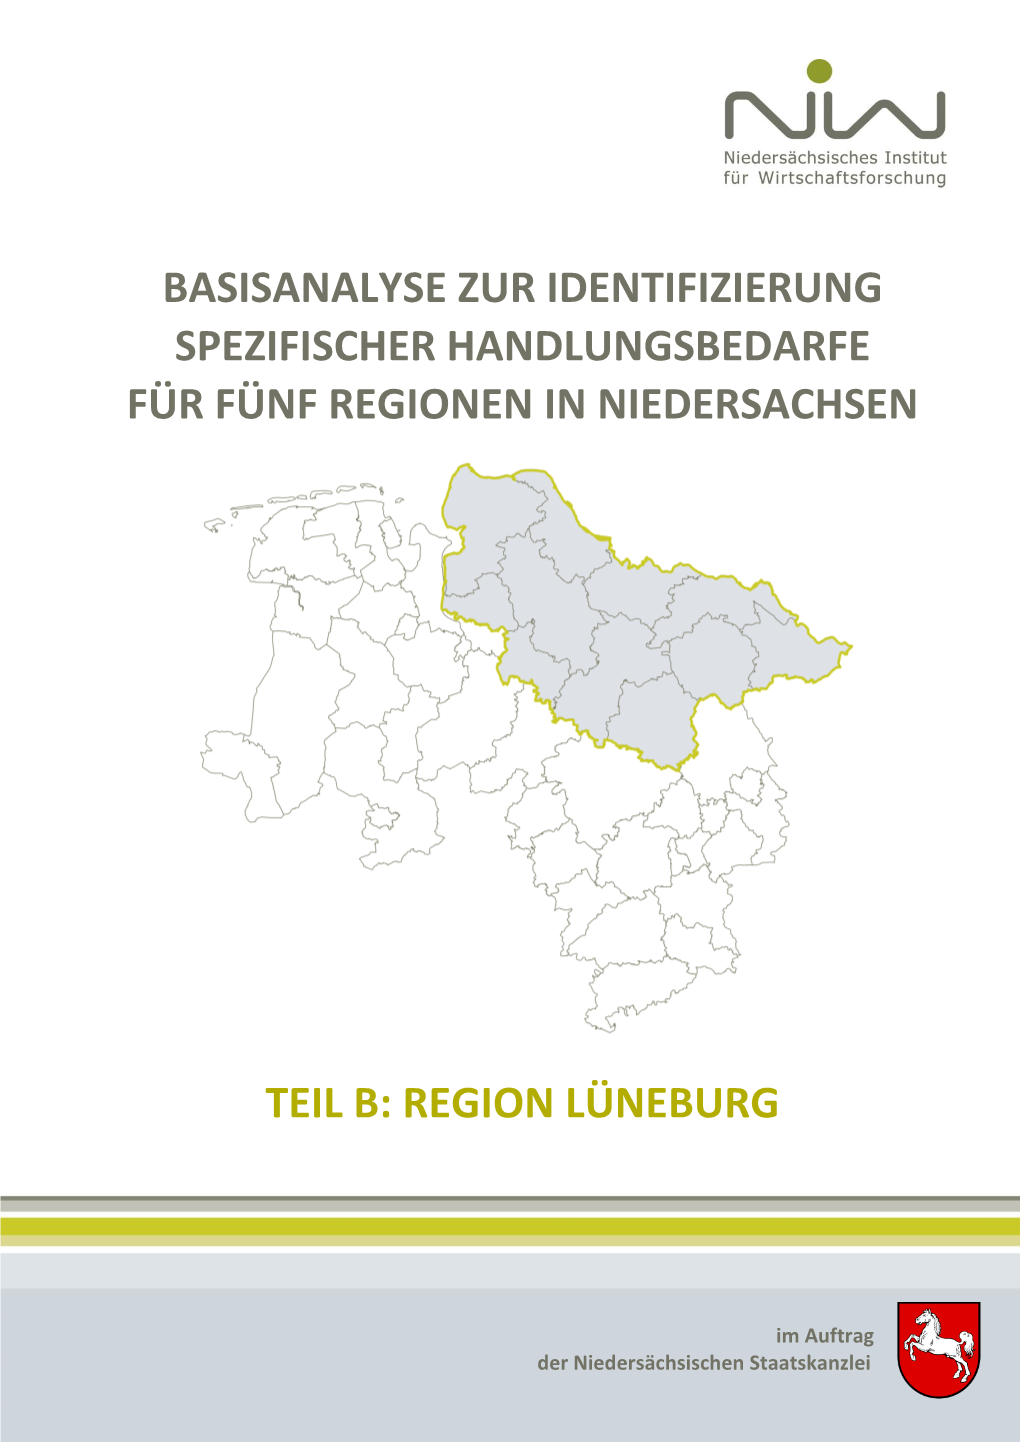 Teil B: Region Lüneburg